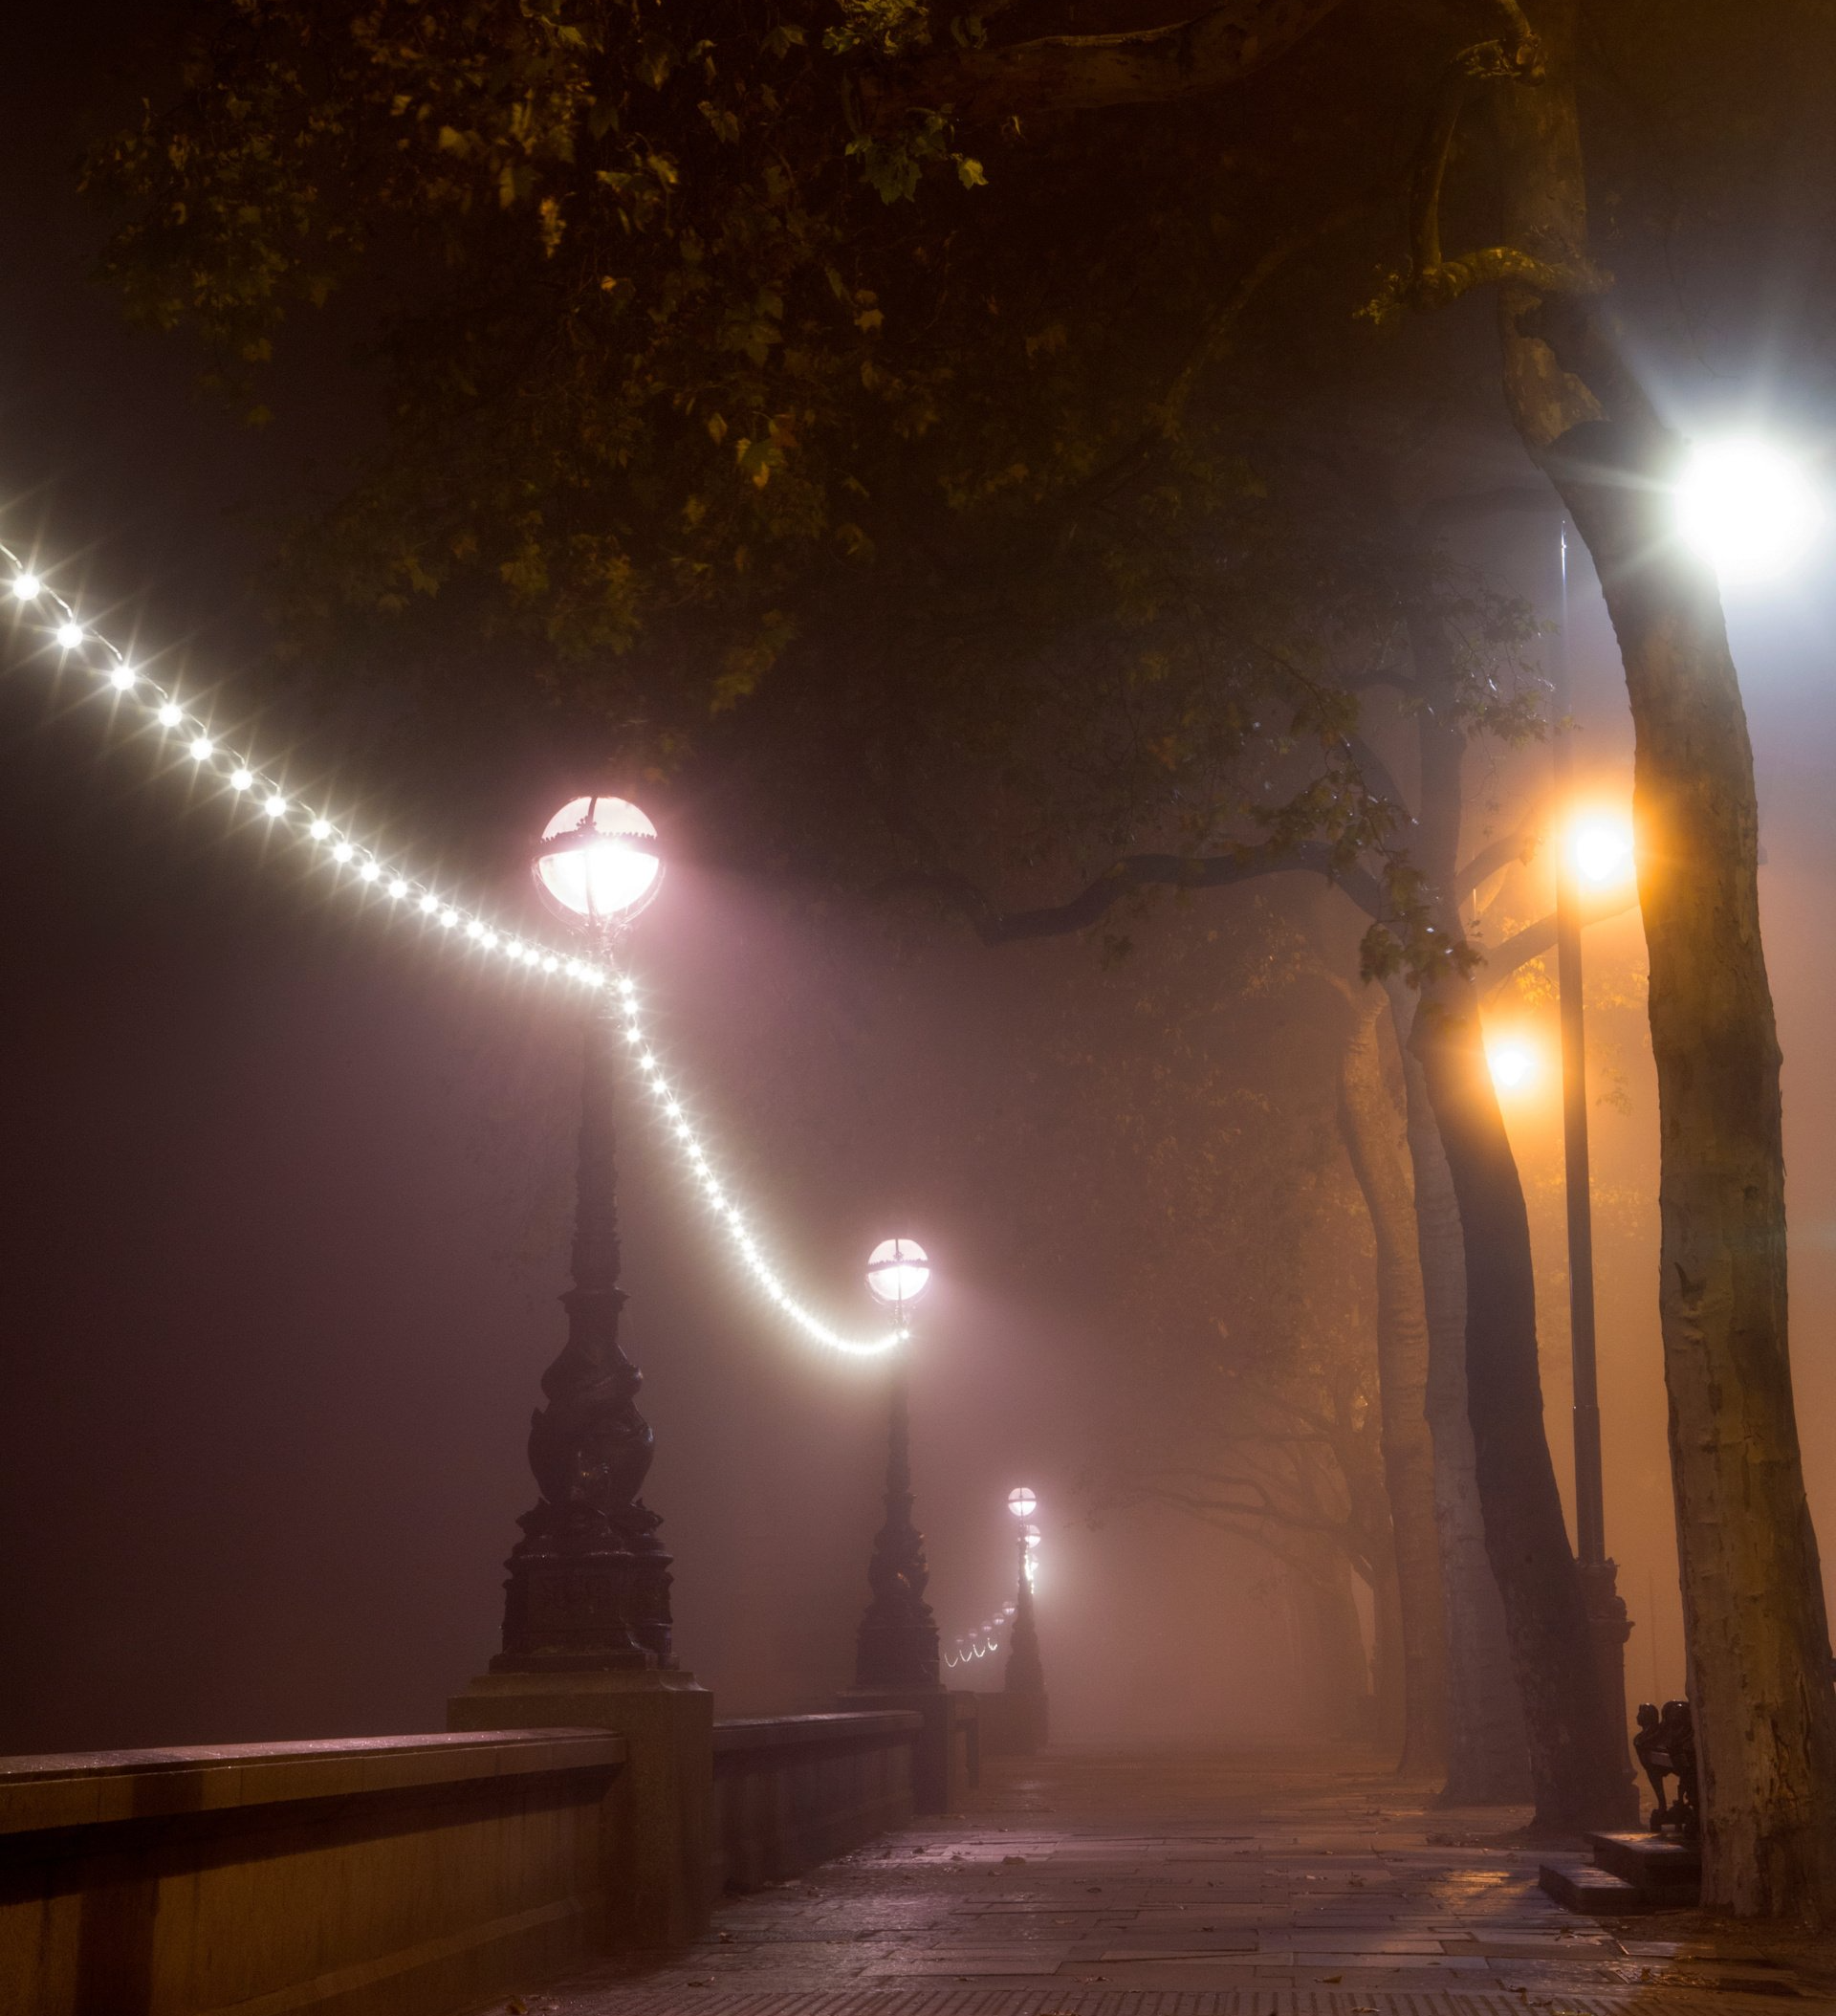 London in fog at night